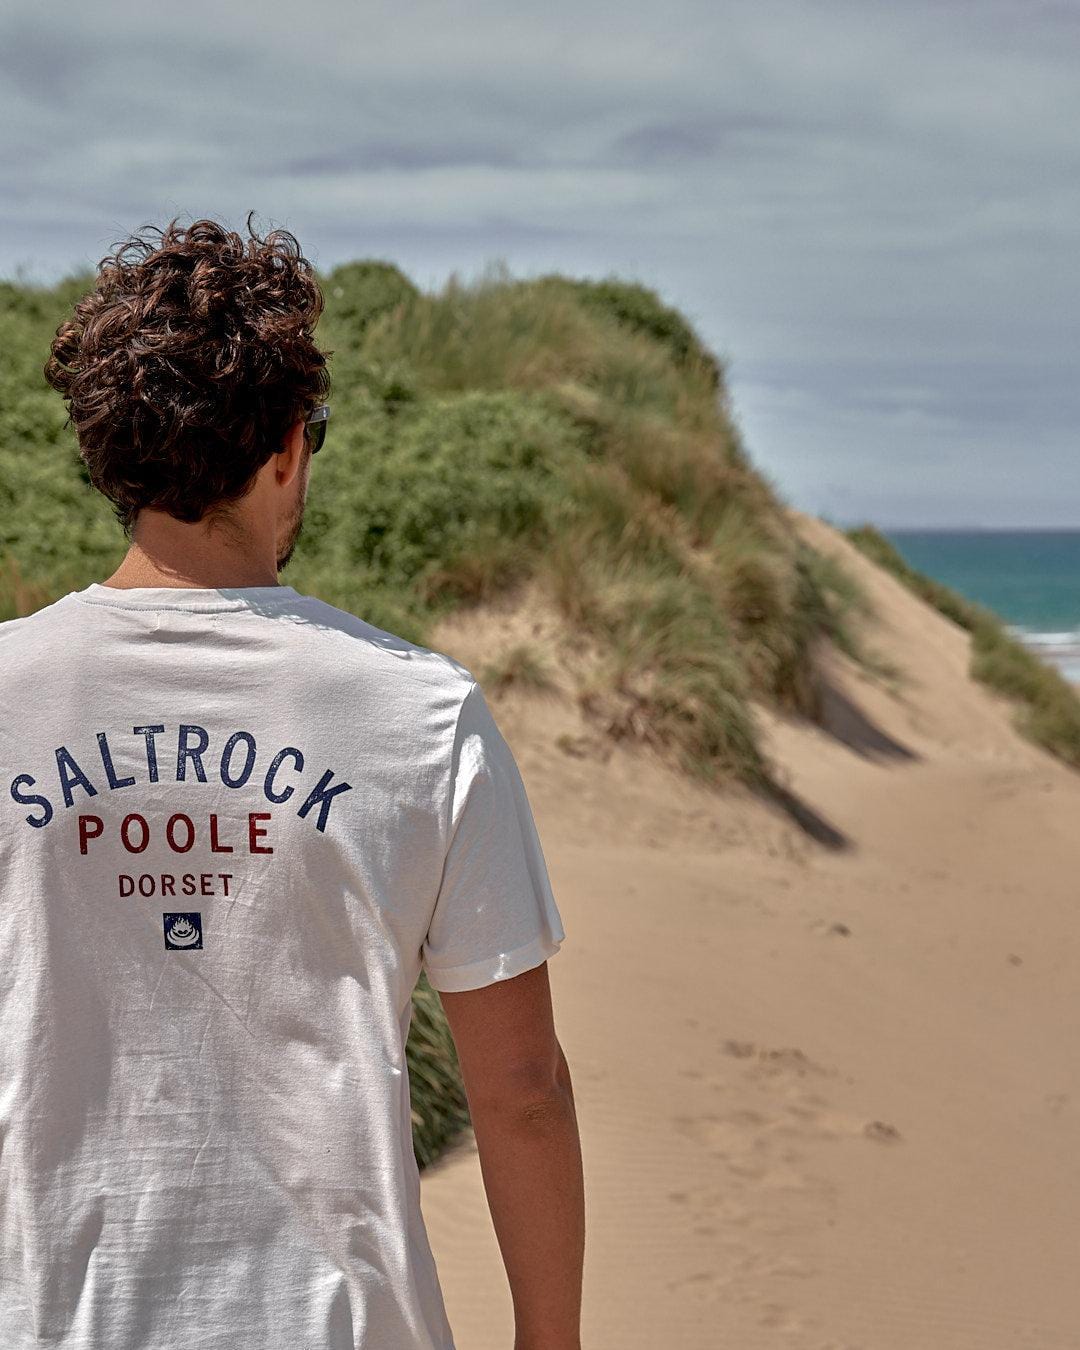 Location - Mens T-Shirt - Poole - White - Saltrock